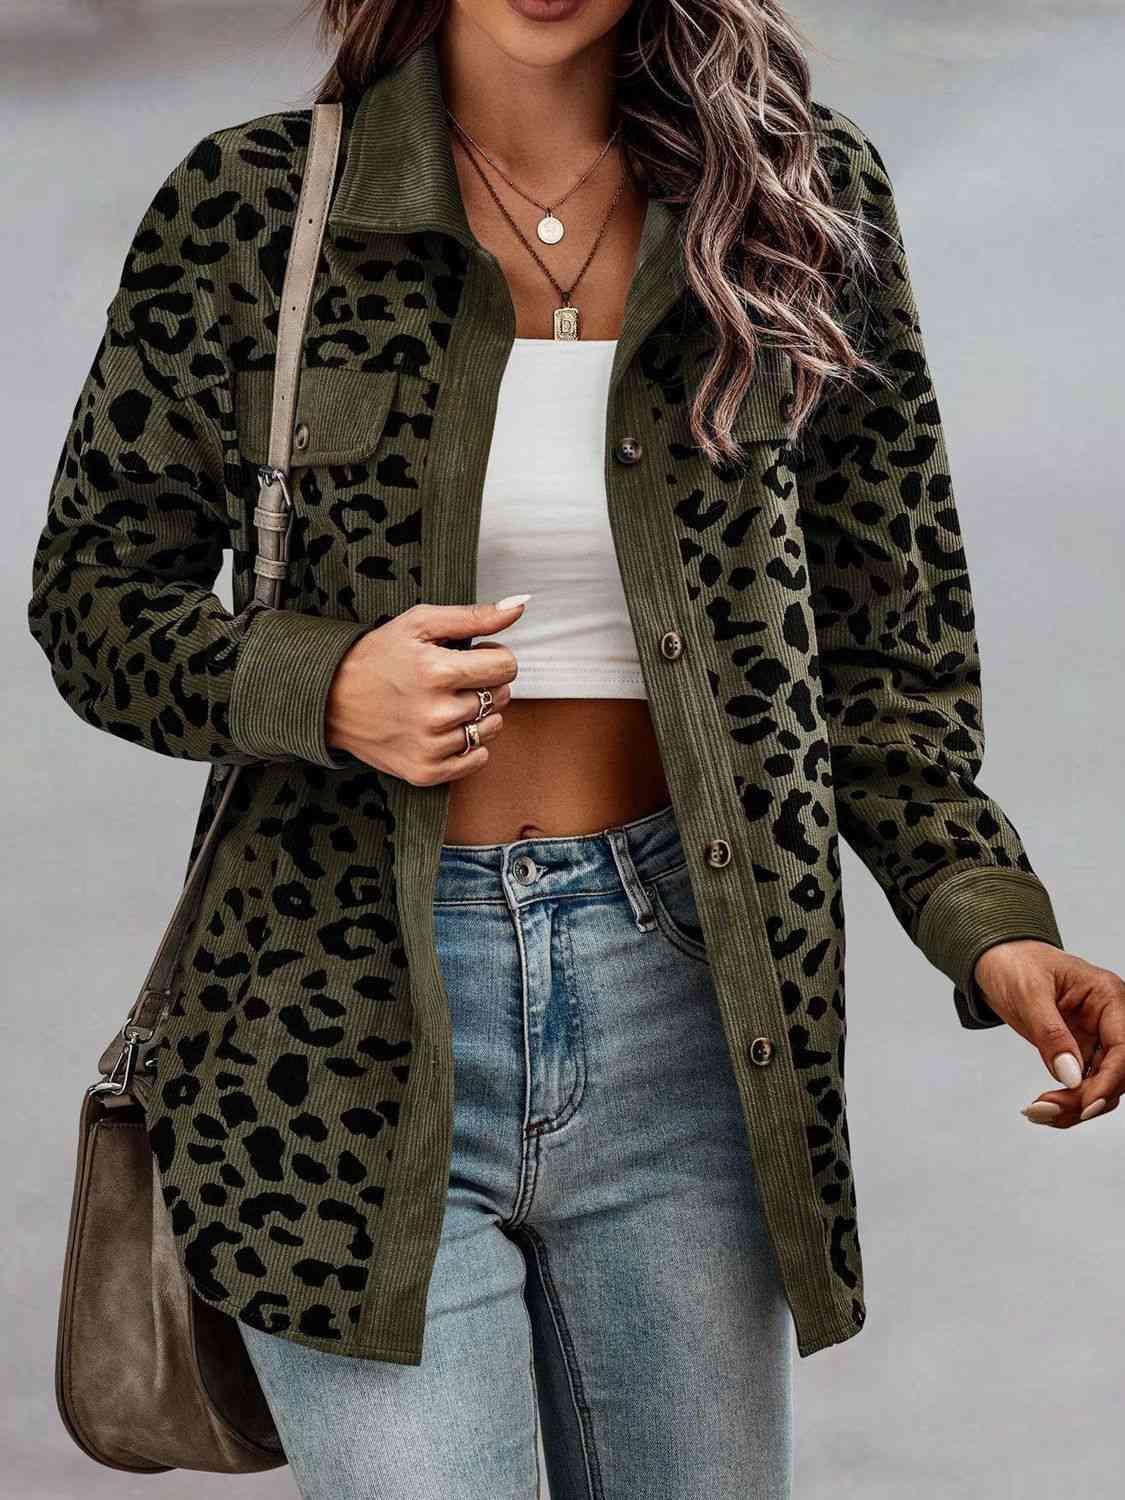 Bona Fide Fashion - Full Size Leopard Buttoned Jacket - Women Fashion - Bona Fide Fashion